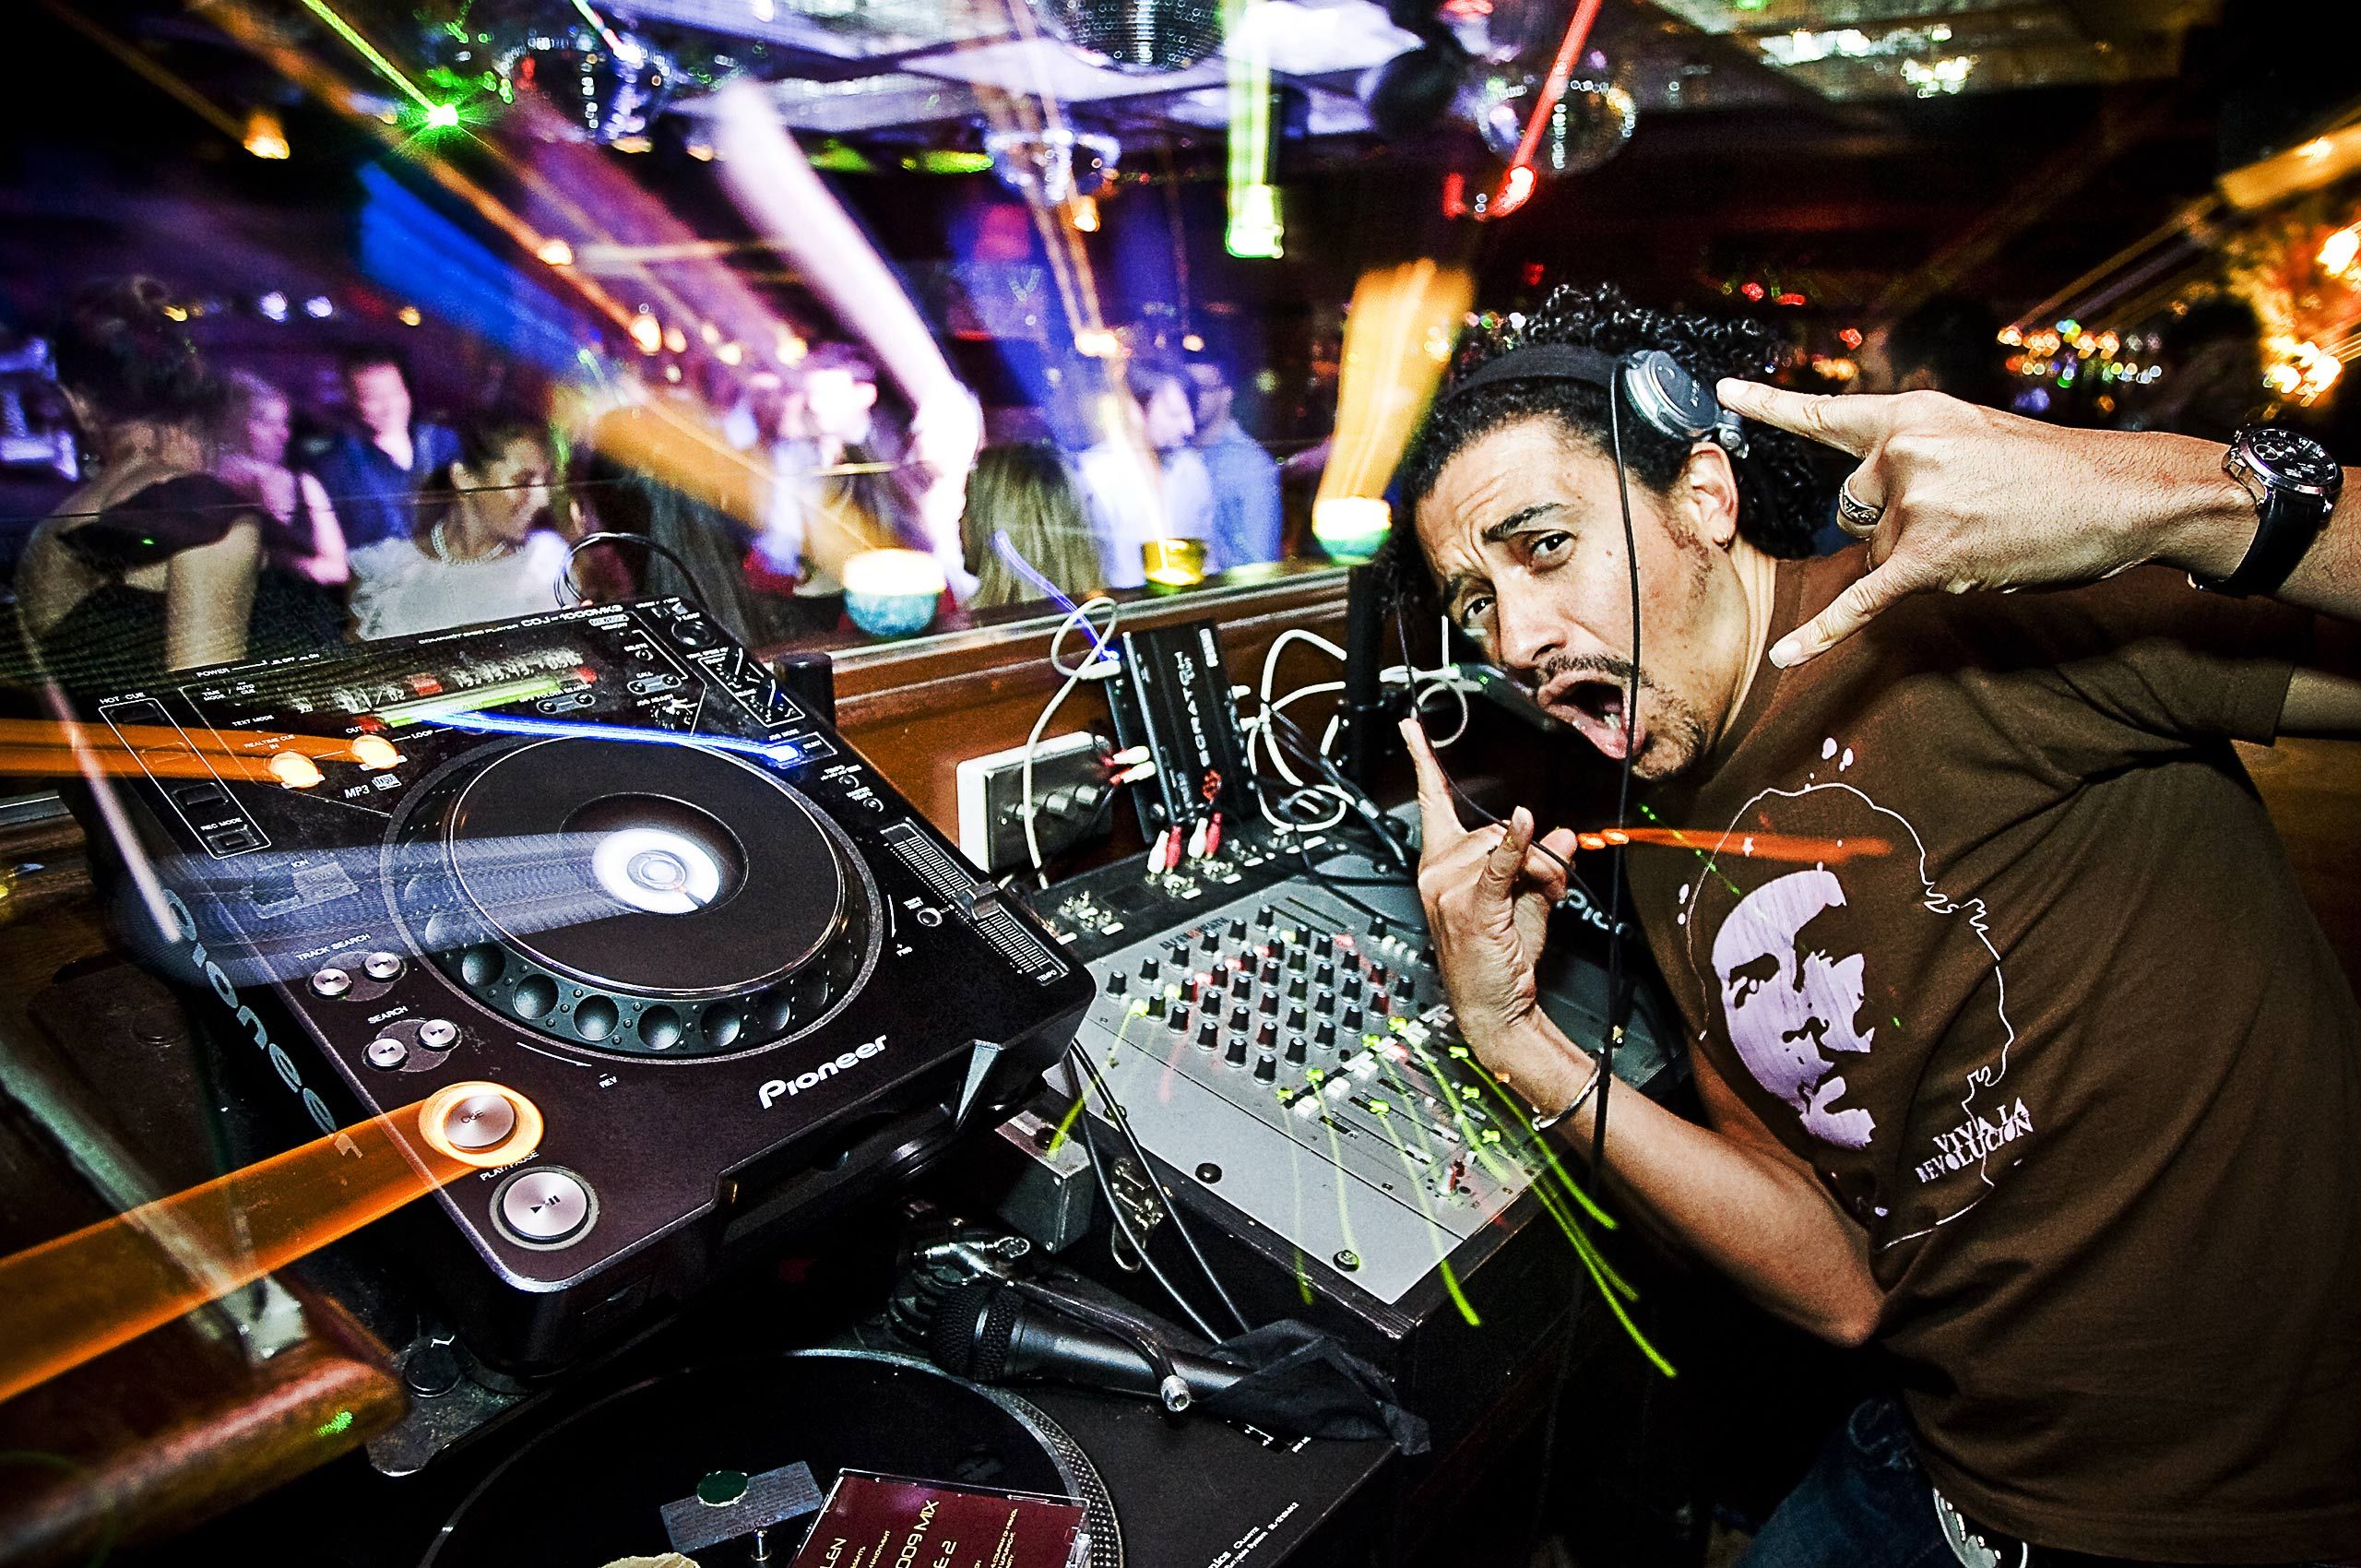 Fidel Castro at the Disco with Cool DJ